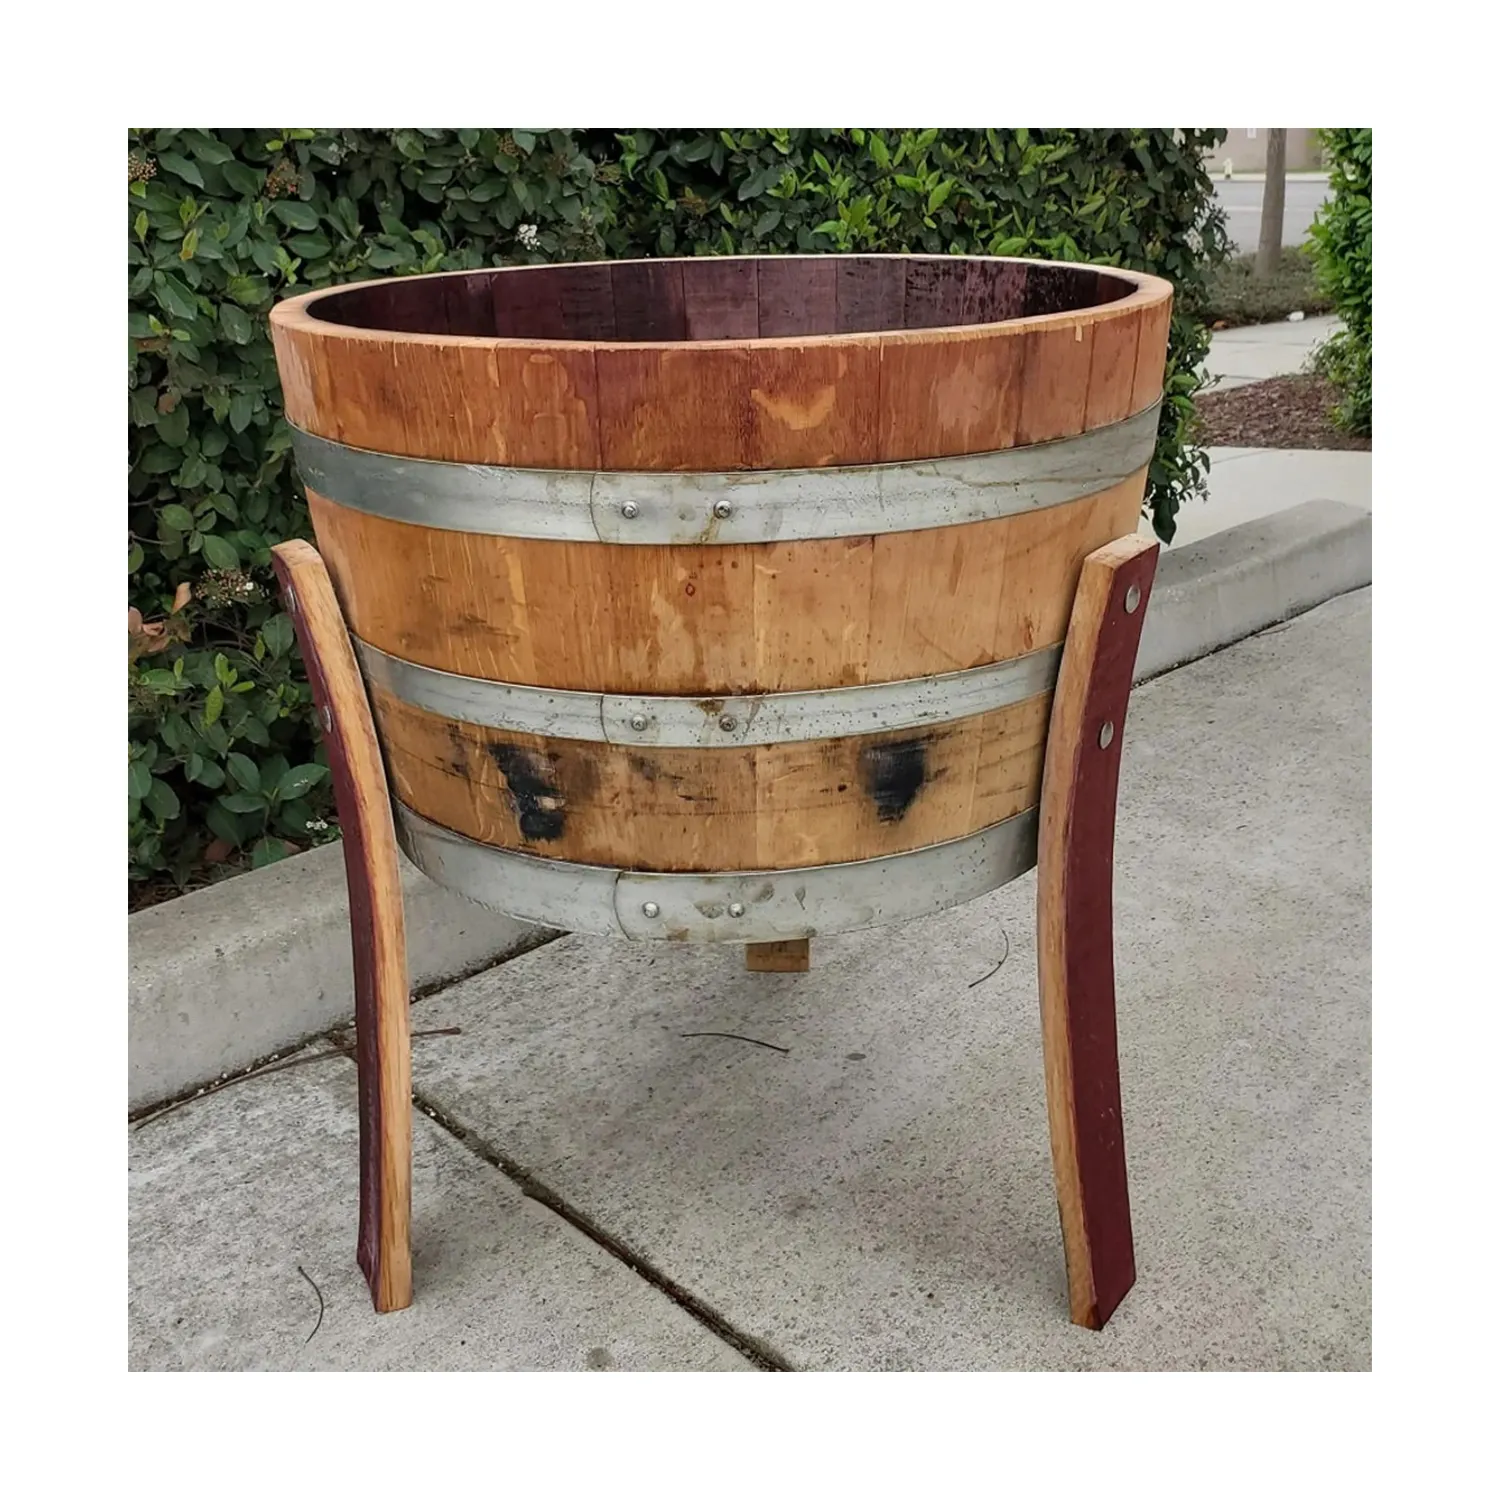 Handmade Half-Barrel Wine Barrels Planter With Legs | Outdoor Large Round Wood Flower Pot | 1/2 Wooden Barrel Garden Planters